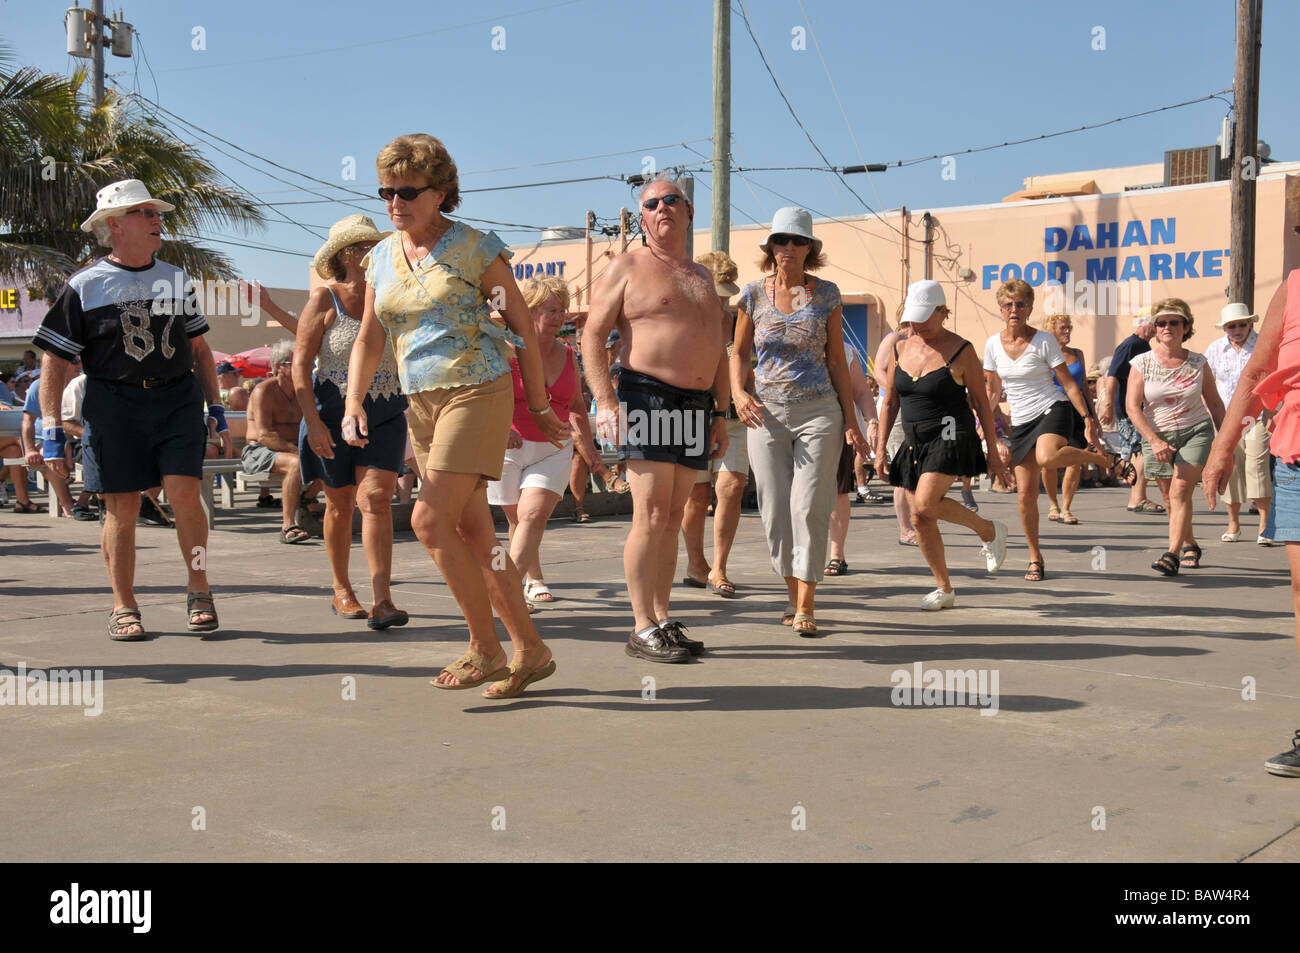 Senior citizen practicing line dancing in Florida. Stock Photo